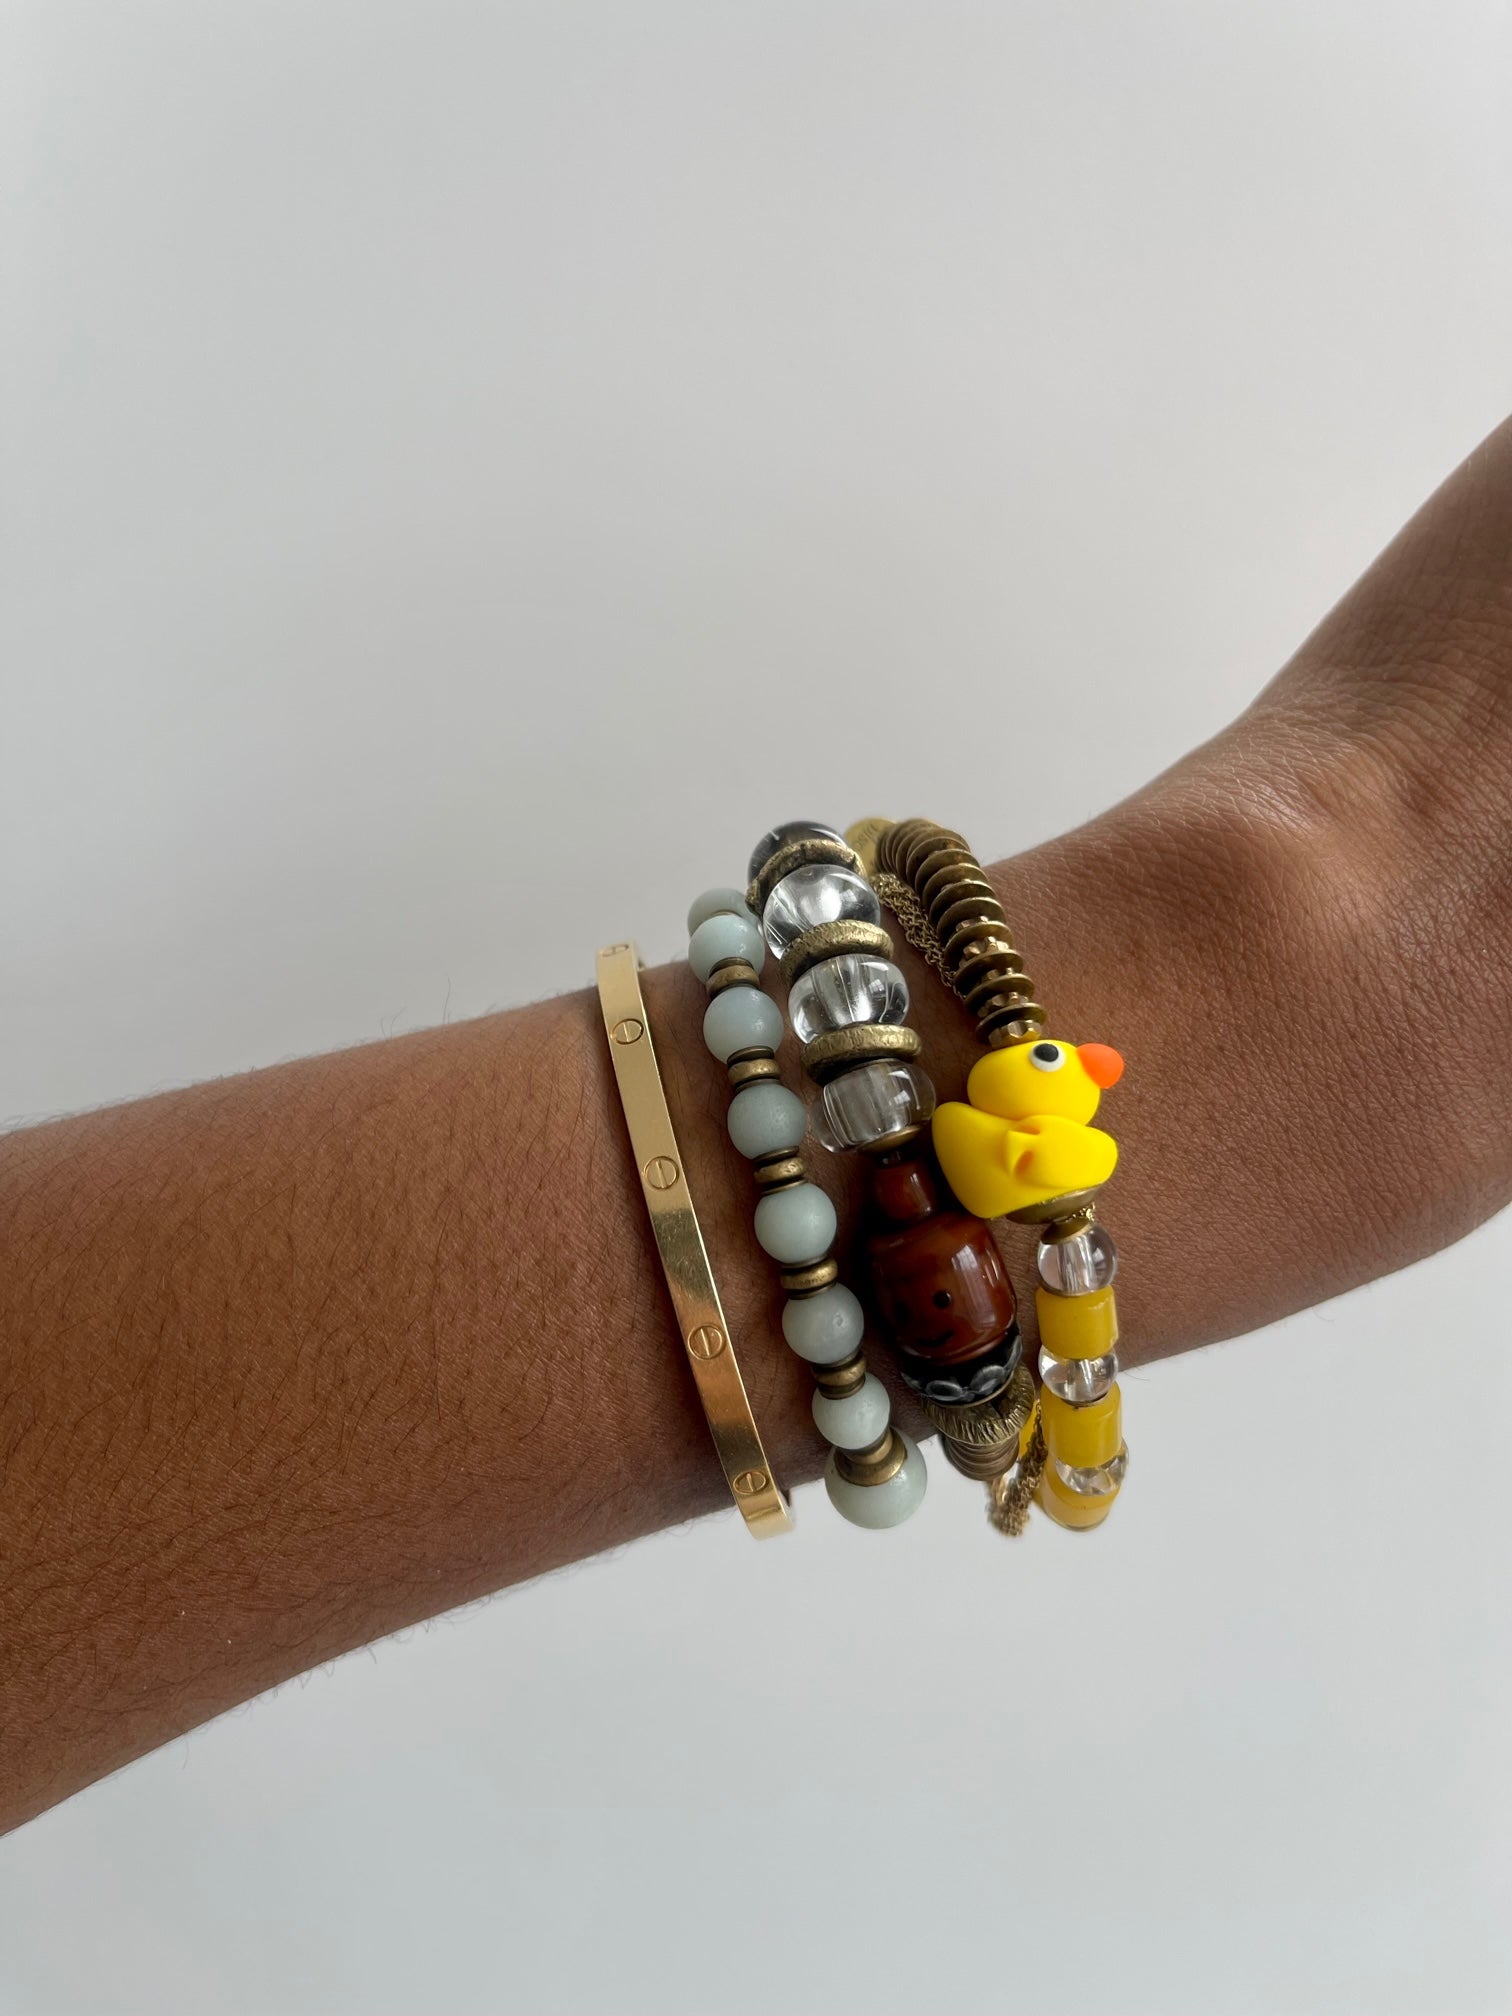 Buy Birds Quack Duck Cucoloris Heart Chain Bracelet Jewelry Charm Fashion  at Amazon.in